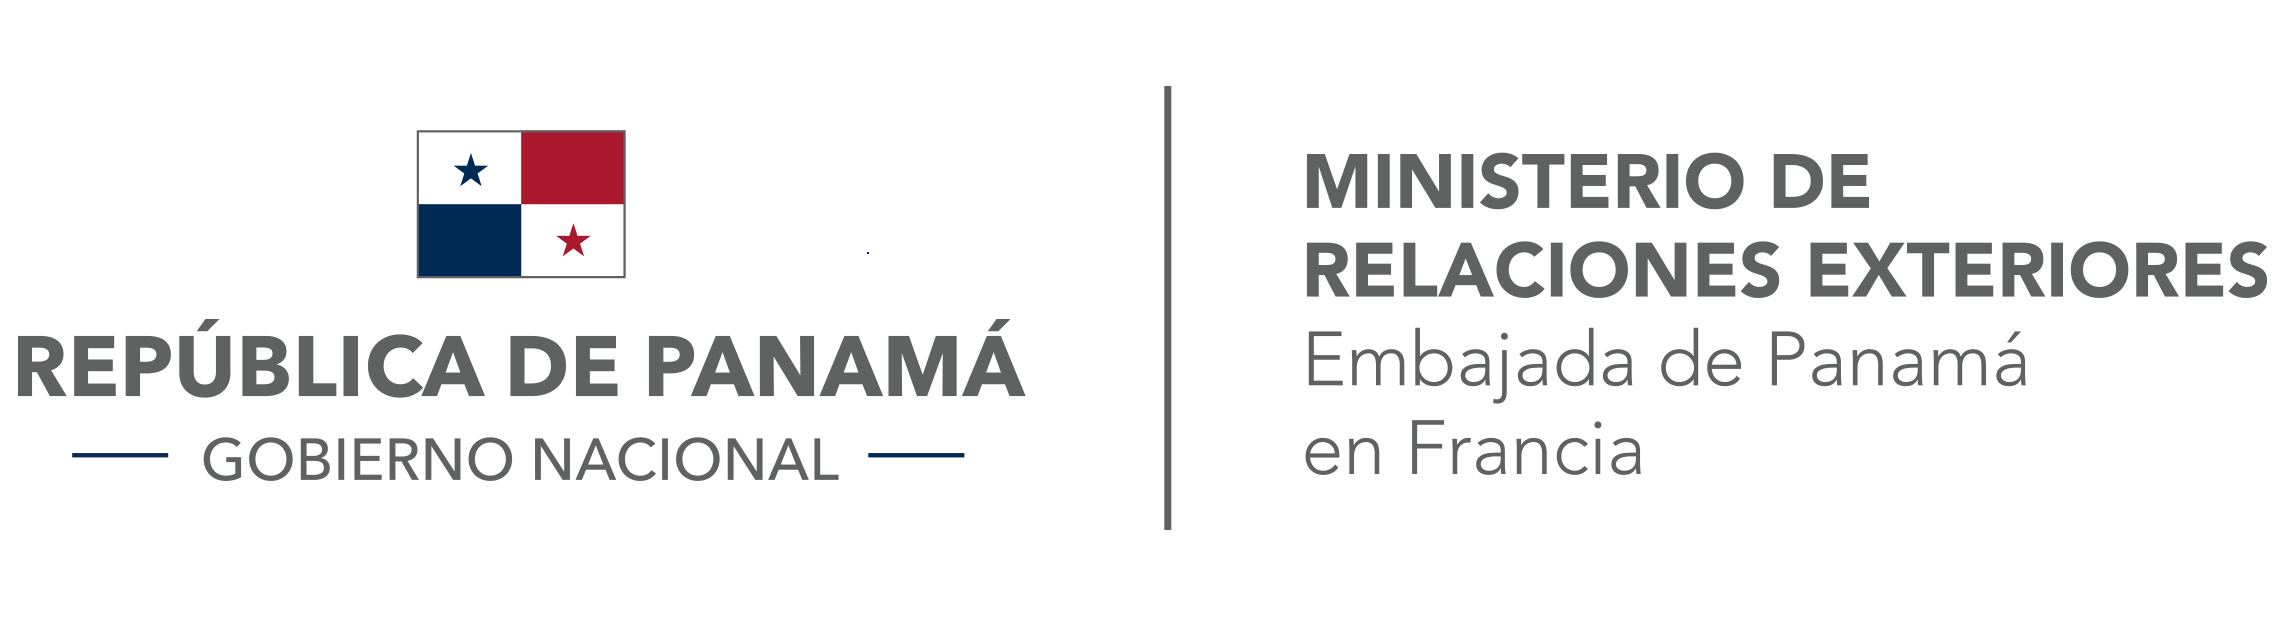 Embajada de Panamá en Francia - Ambassade du Panama en France